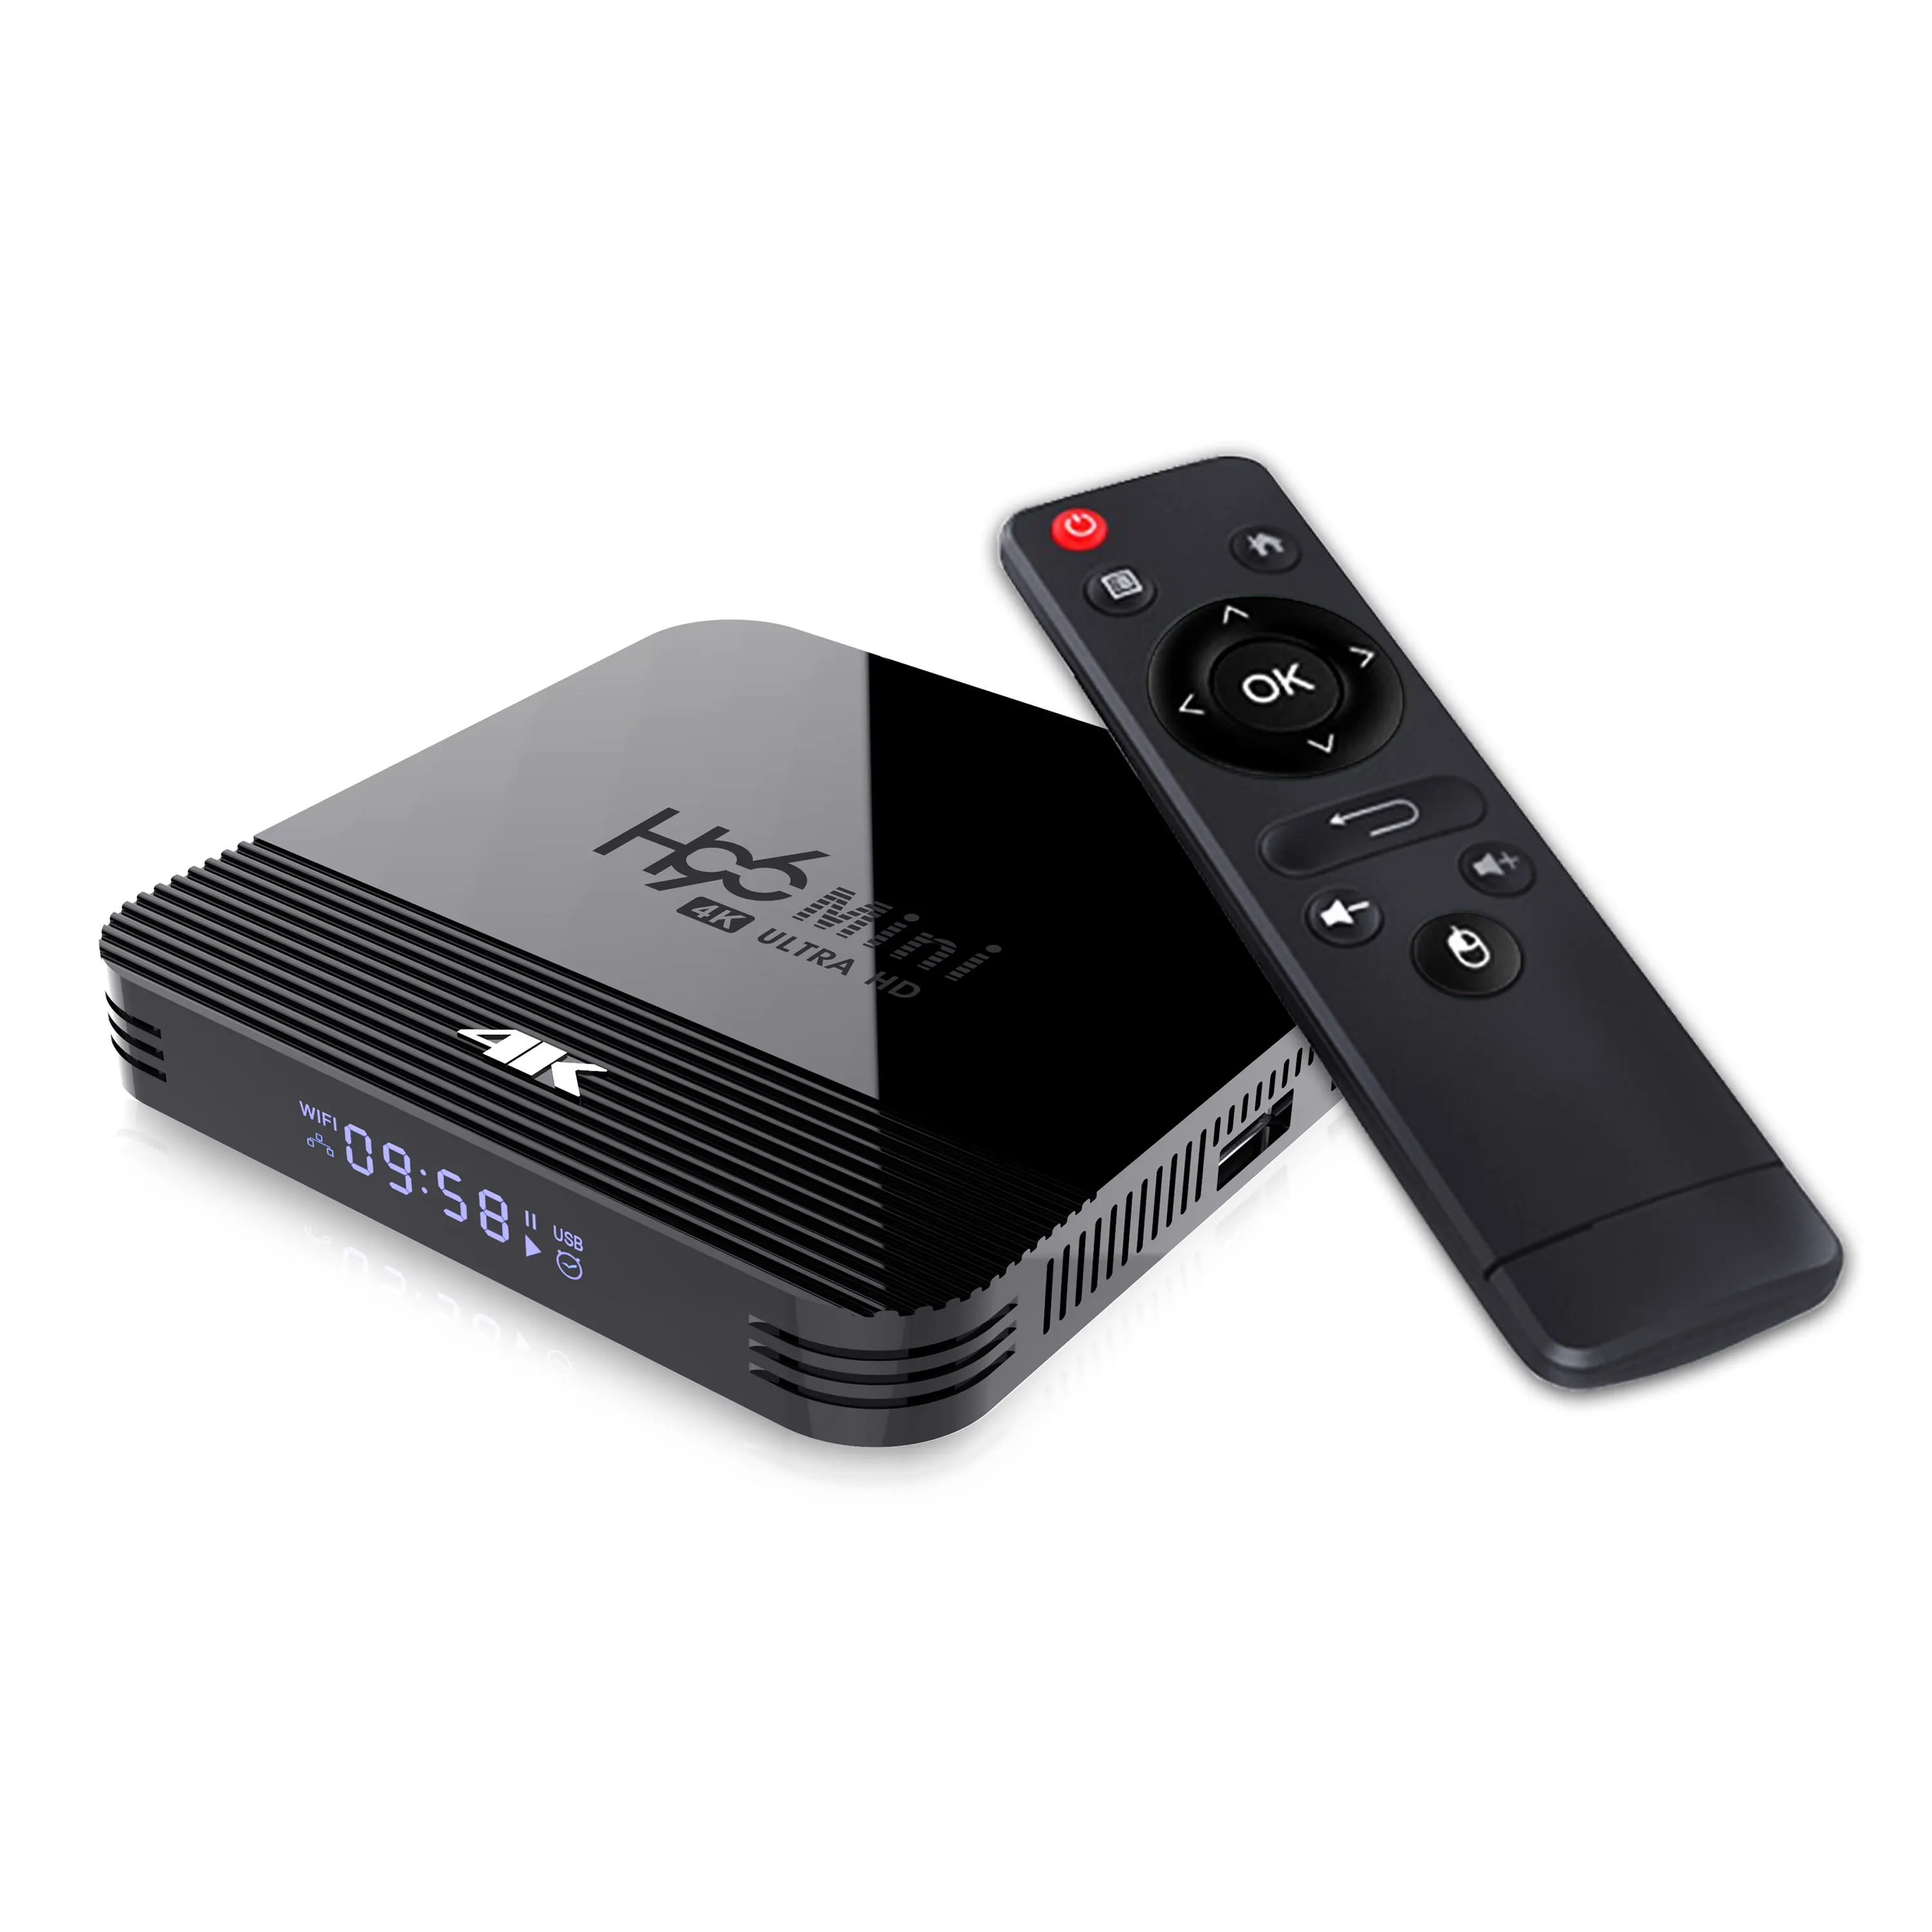 लागत-प्रभावी अनुकूलित सॉफ्टवेयर डाउनलोड एंड्रॉयड स्मार्ट इंटरनेट टीवी हवा करने के लिए स्वतंत्र केबल सेट टॉप बॉक्स H96 मिनी h8